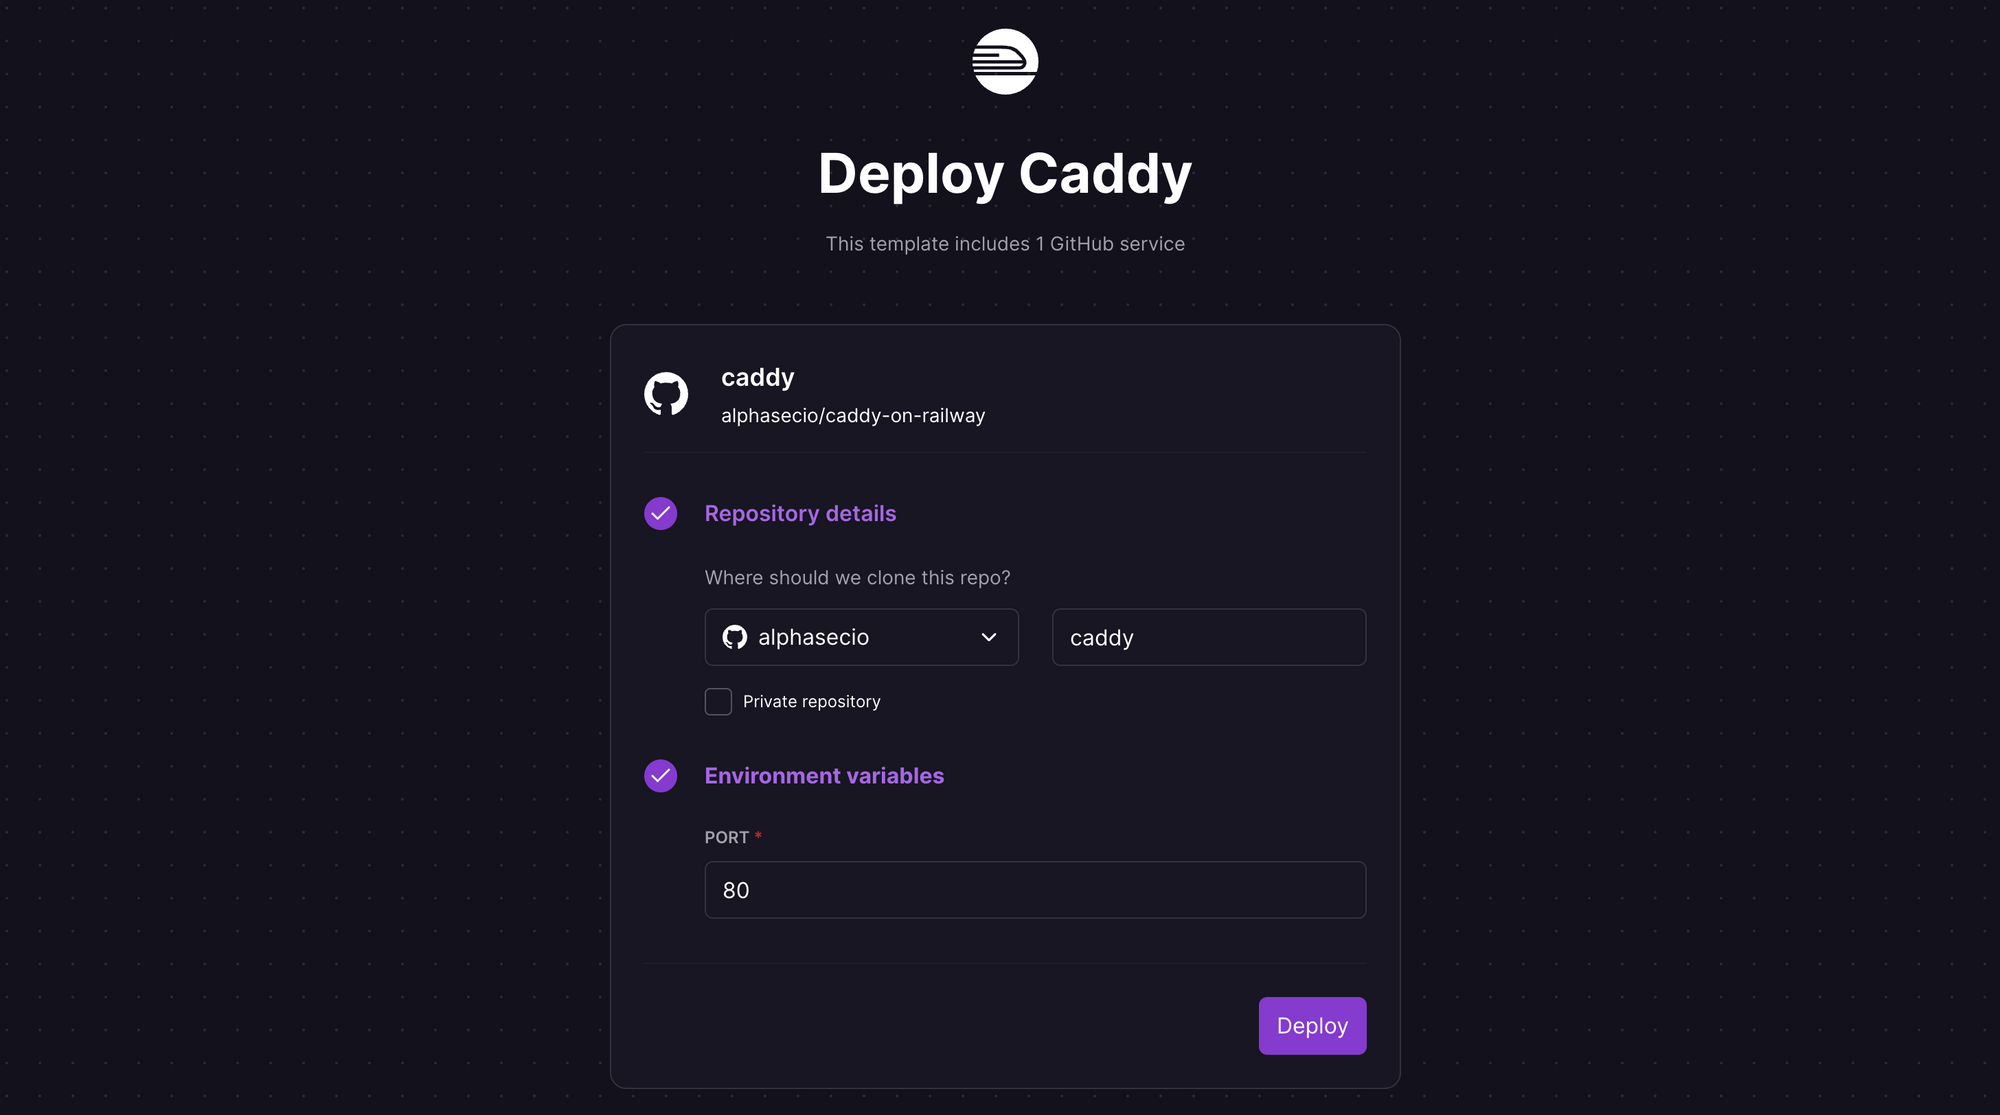 Caddy on Railway deployment template